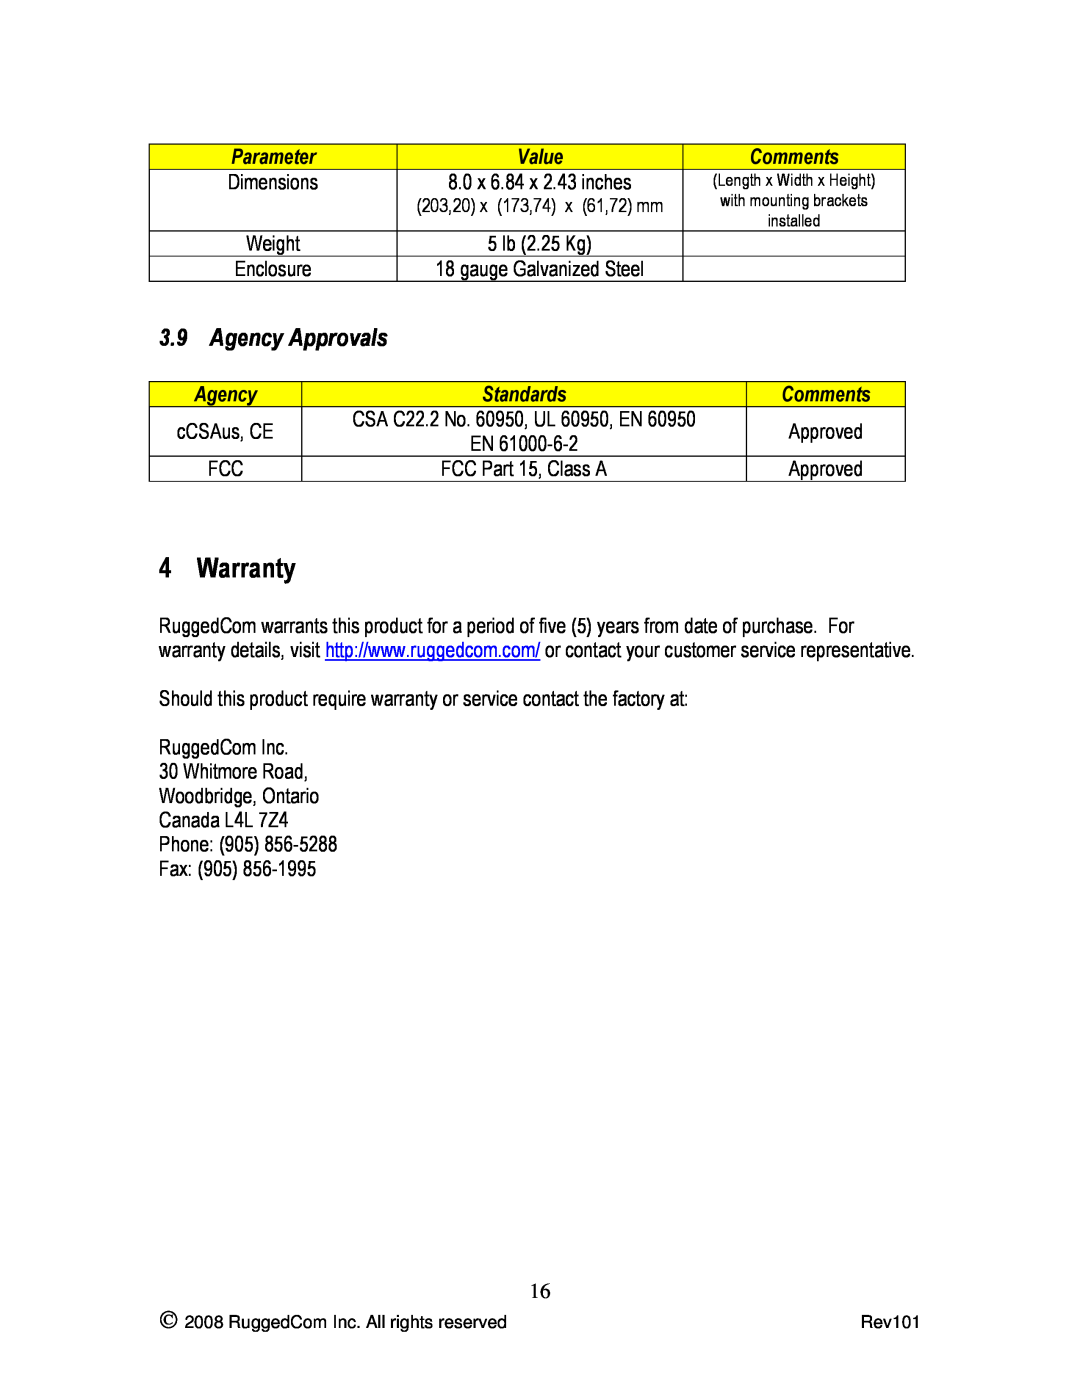 RuggedCom RS500 manual Warranty, Agency Approvals 